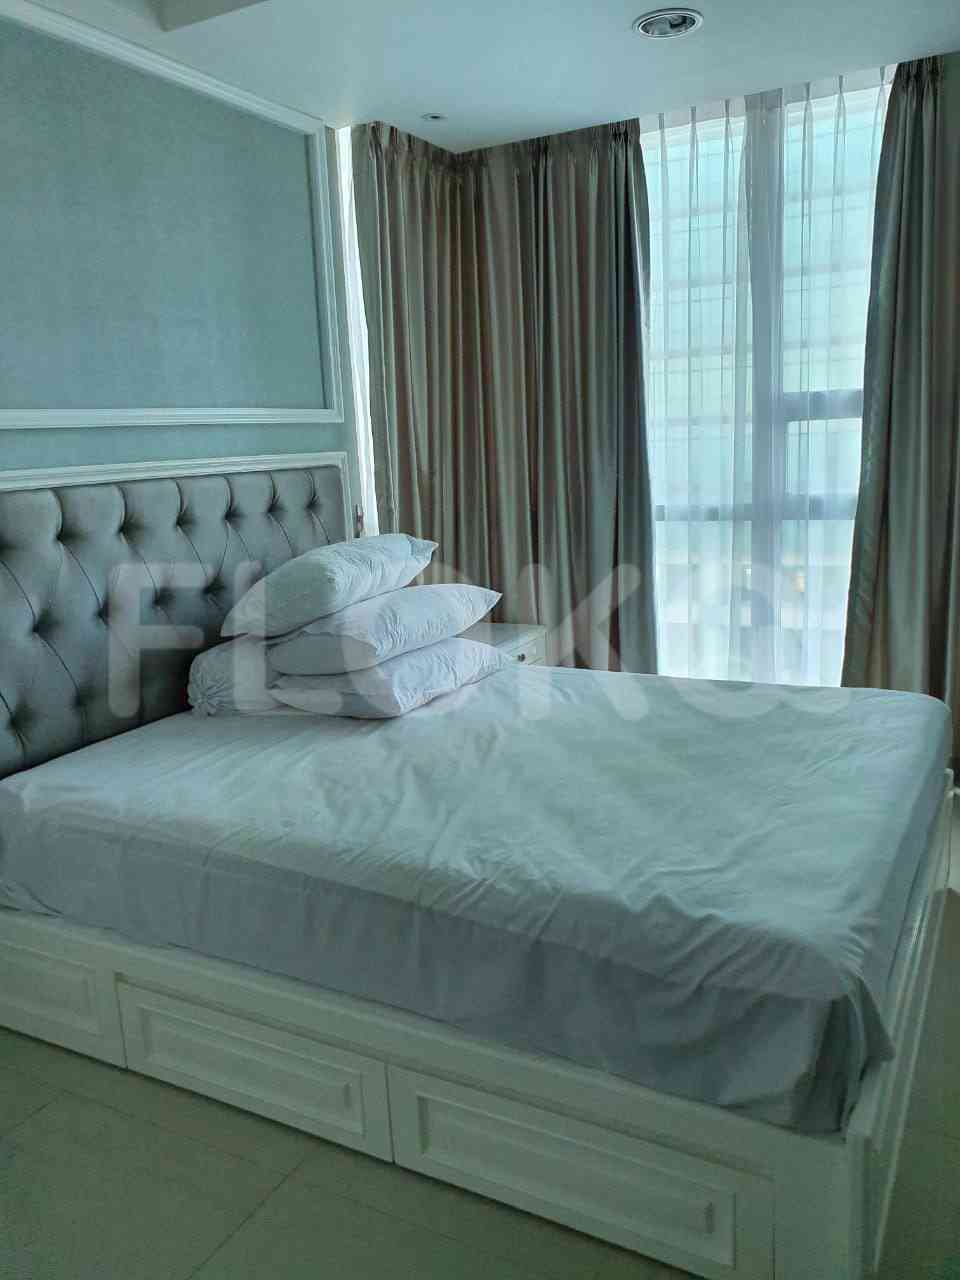 2 Bedroom on 16th Floor for Rent in Kemang Village Residence - fke113 7